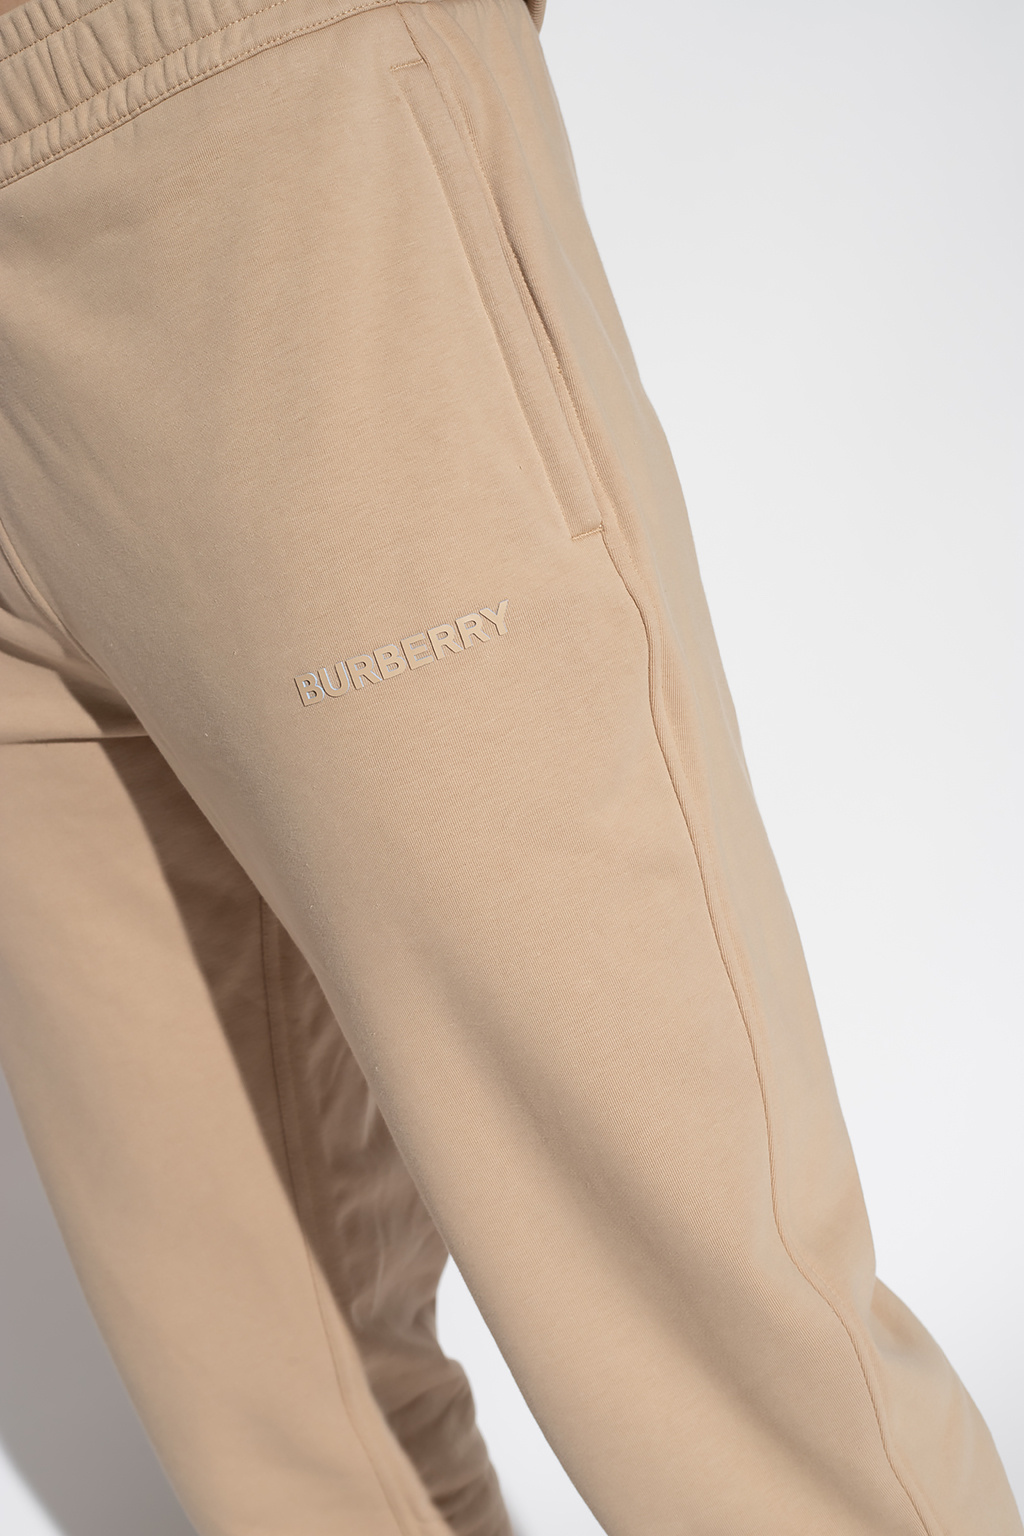 Burberry ‘Milo’ sweatpants